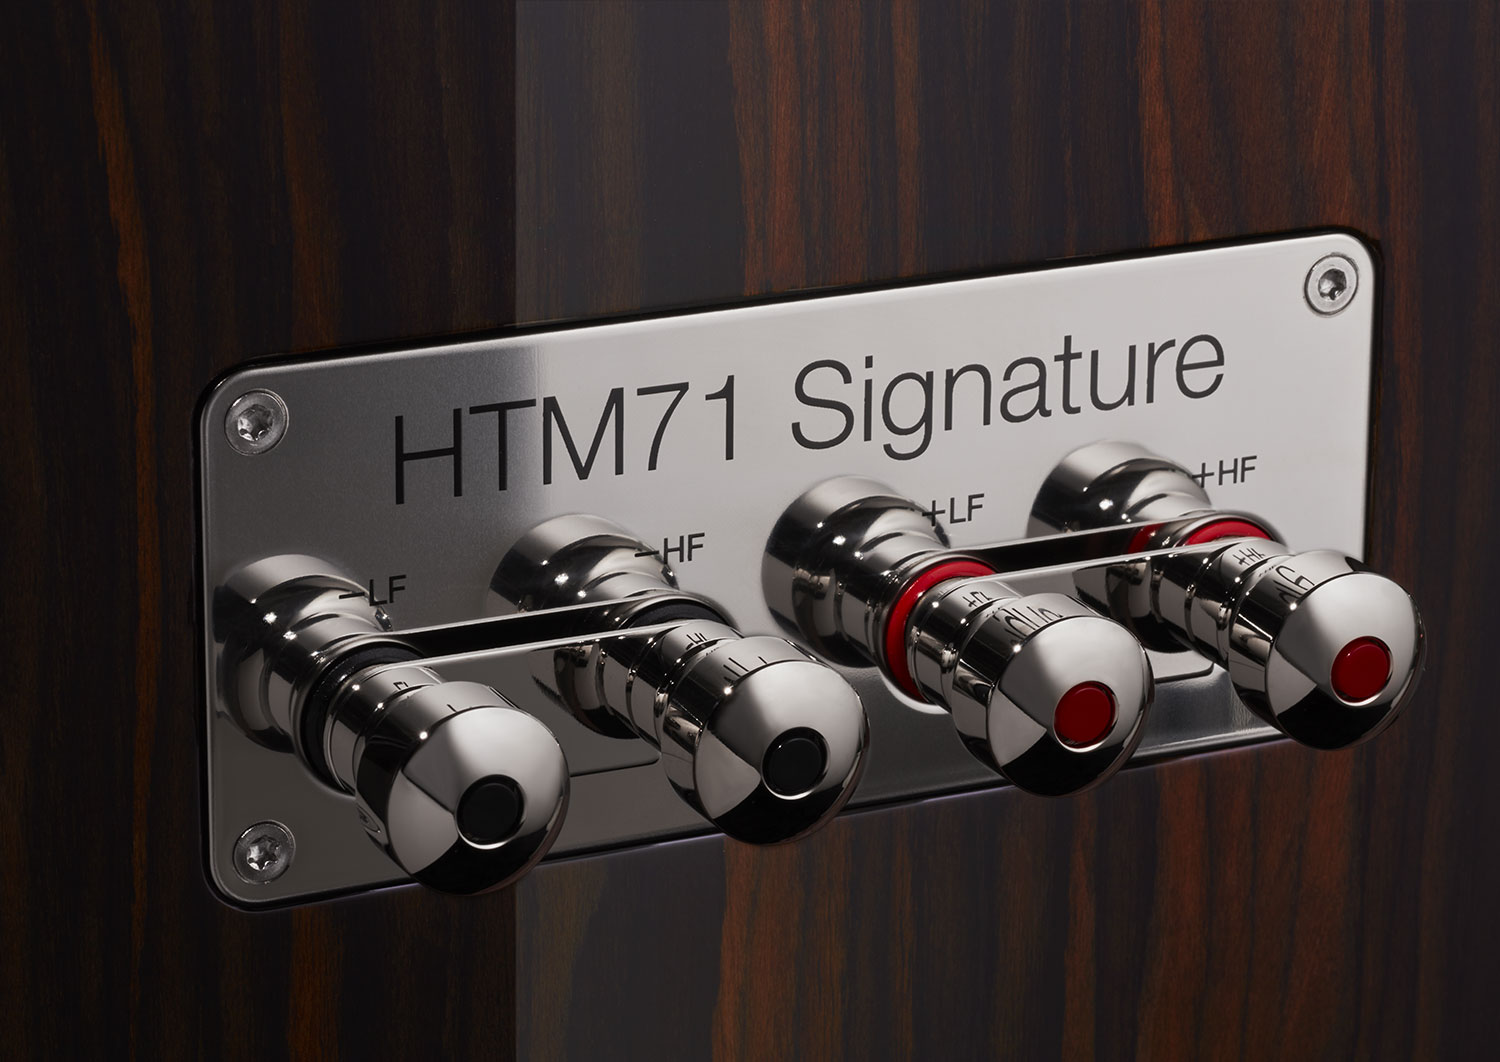 HTM-71 S3 Signature 
(Datuk Highgloss)